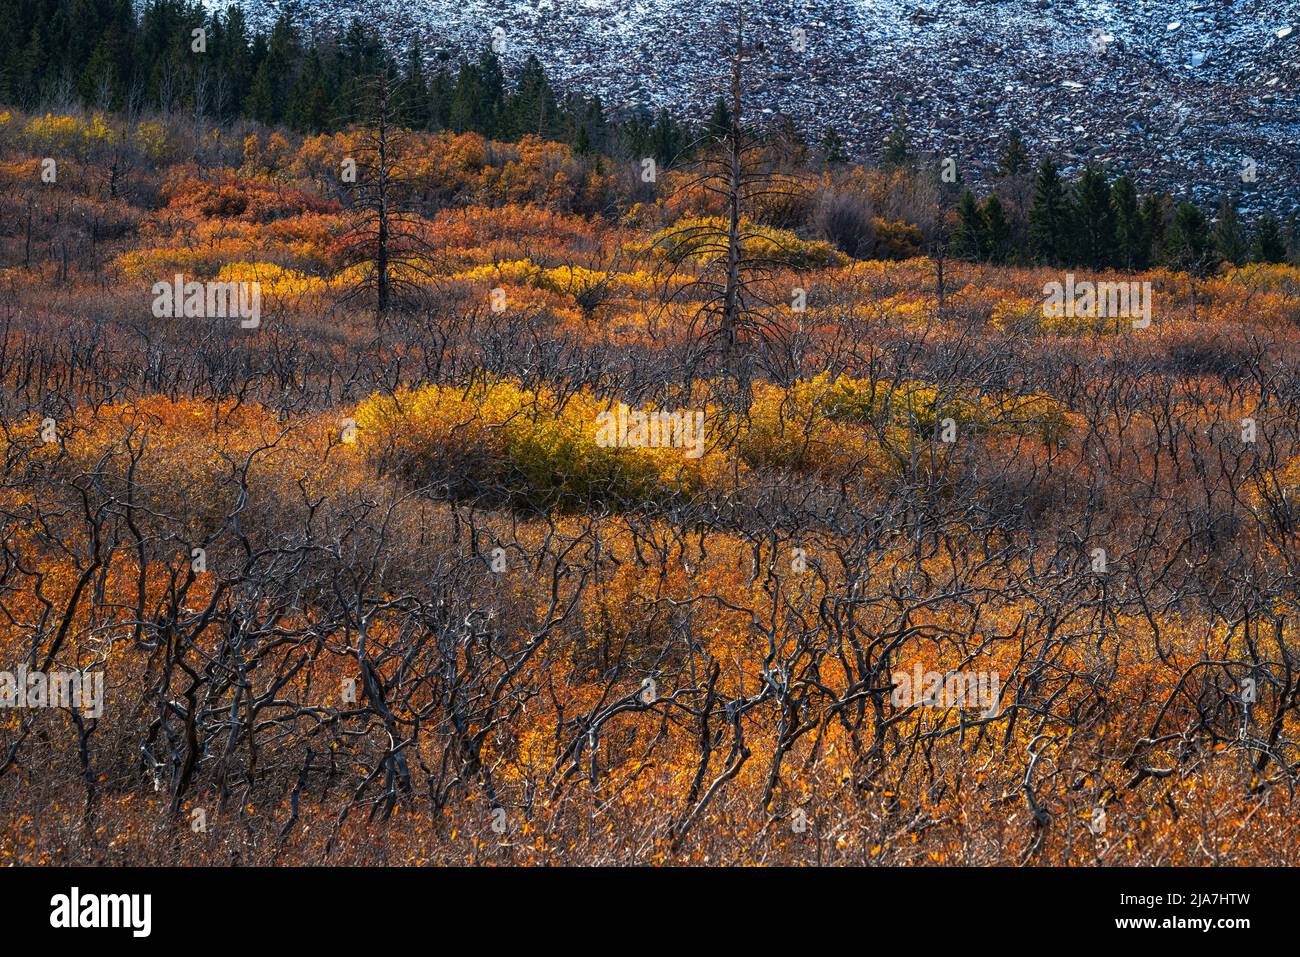 Autumn color in the La Sal Mountains near Moab, Utah Stock Photo